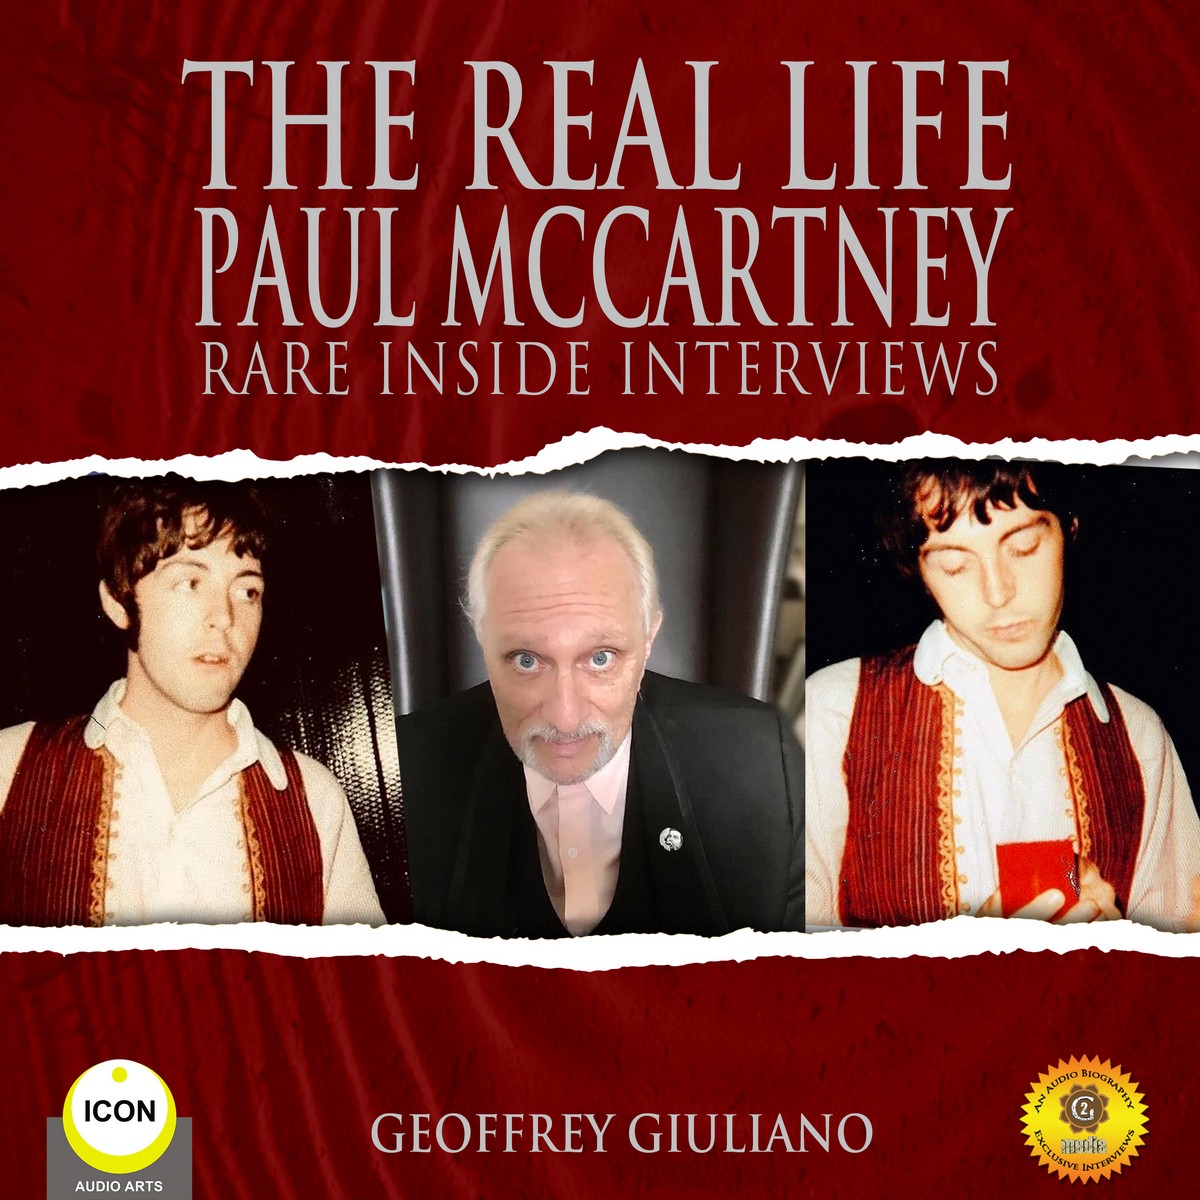 The Real Life Paul McCartney – Rare Inside Interviews